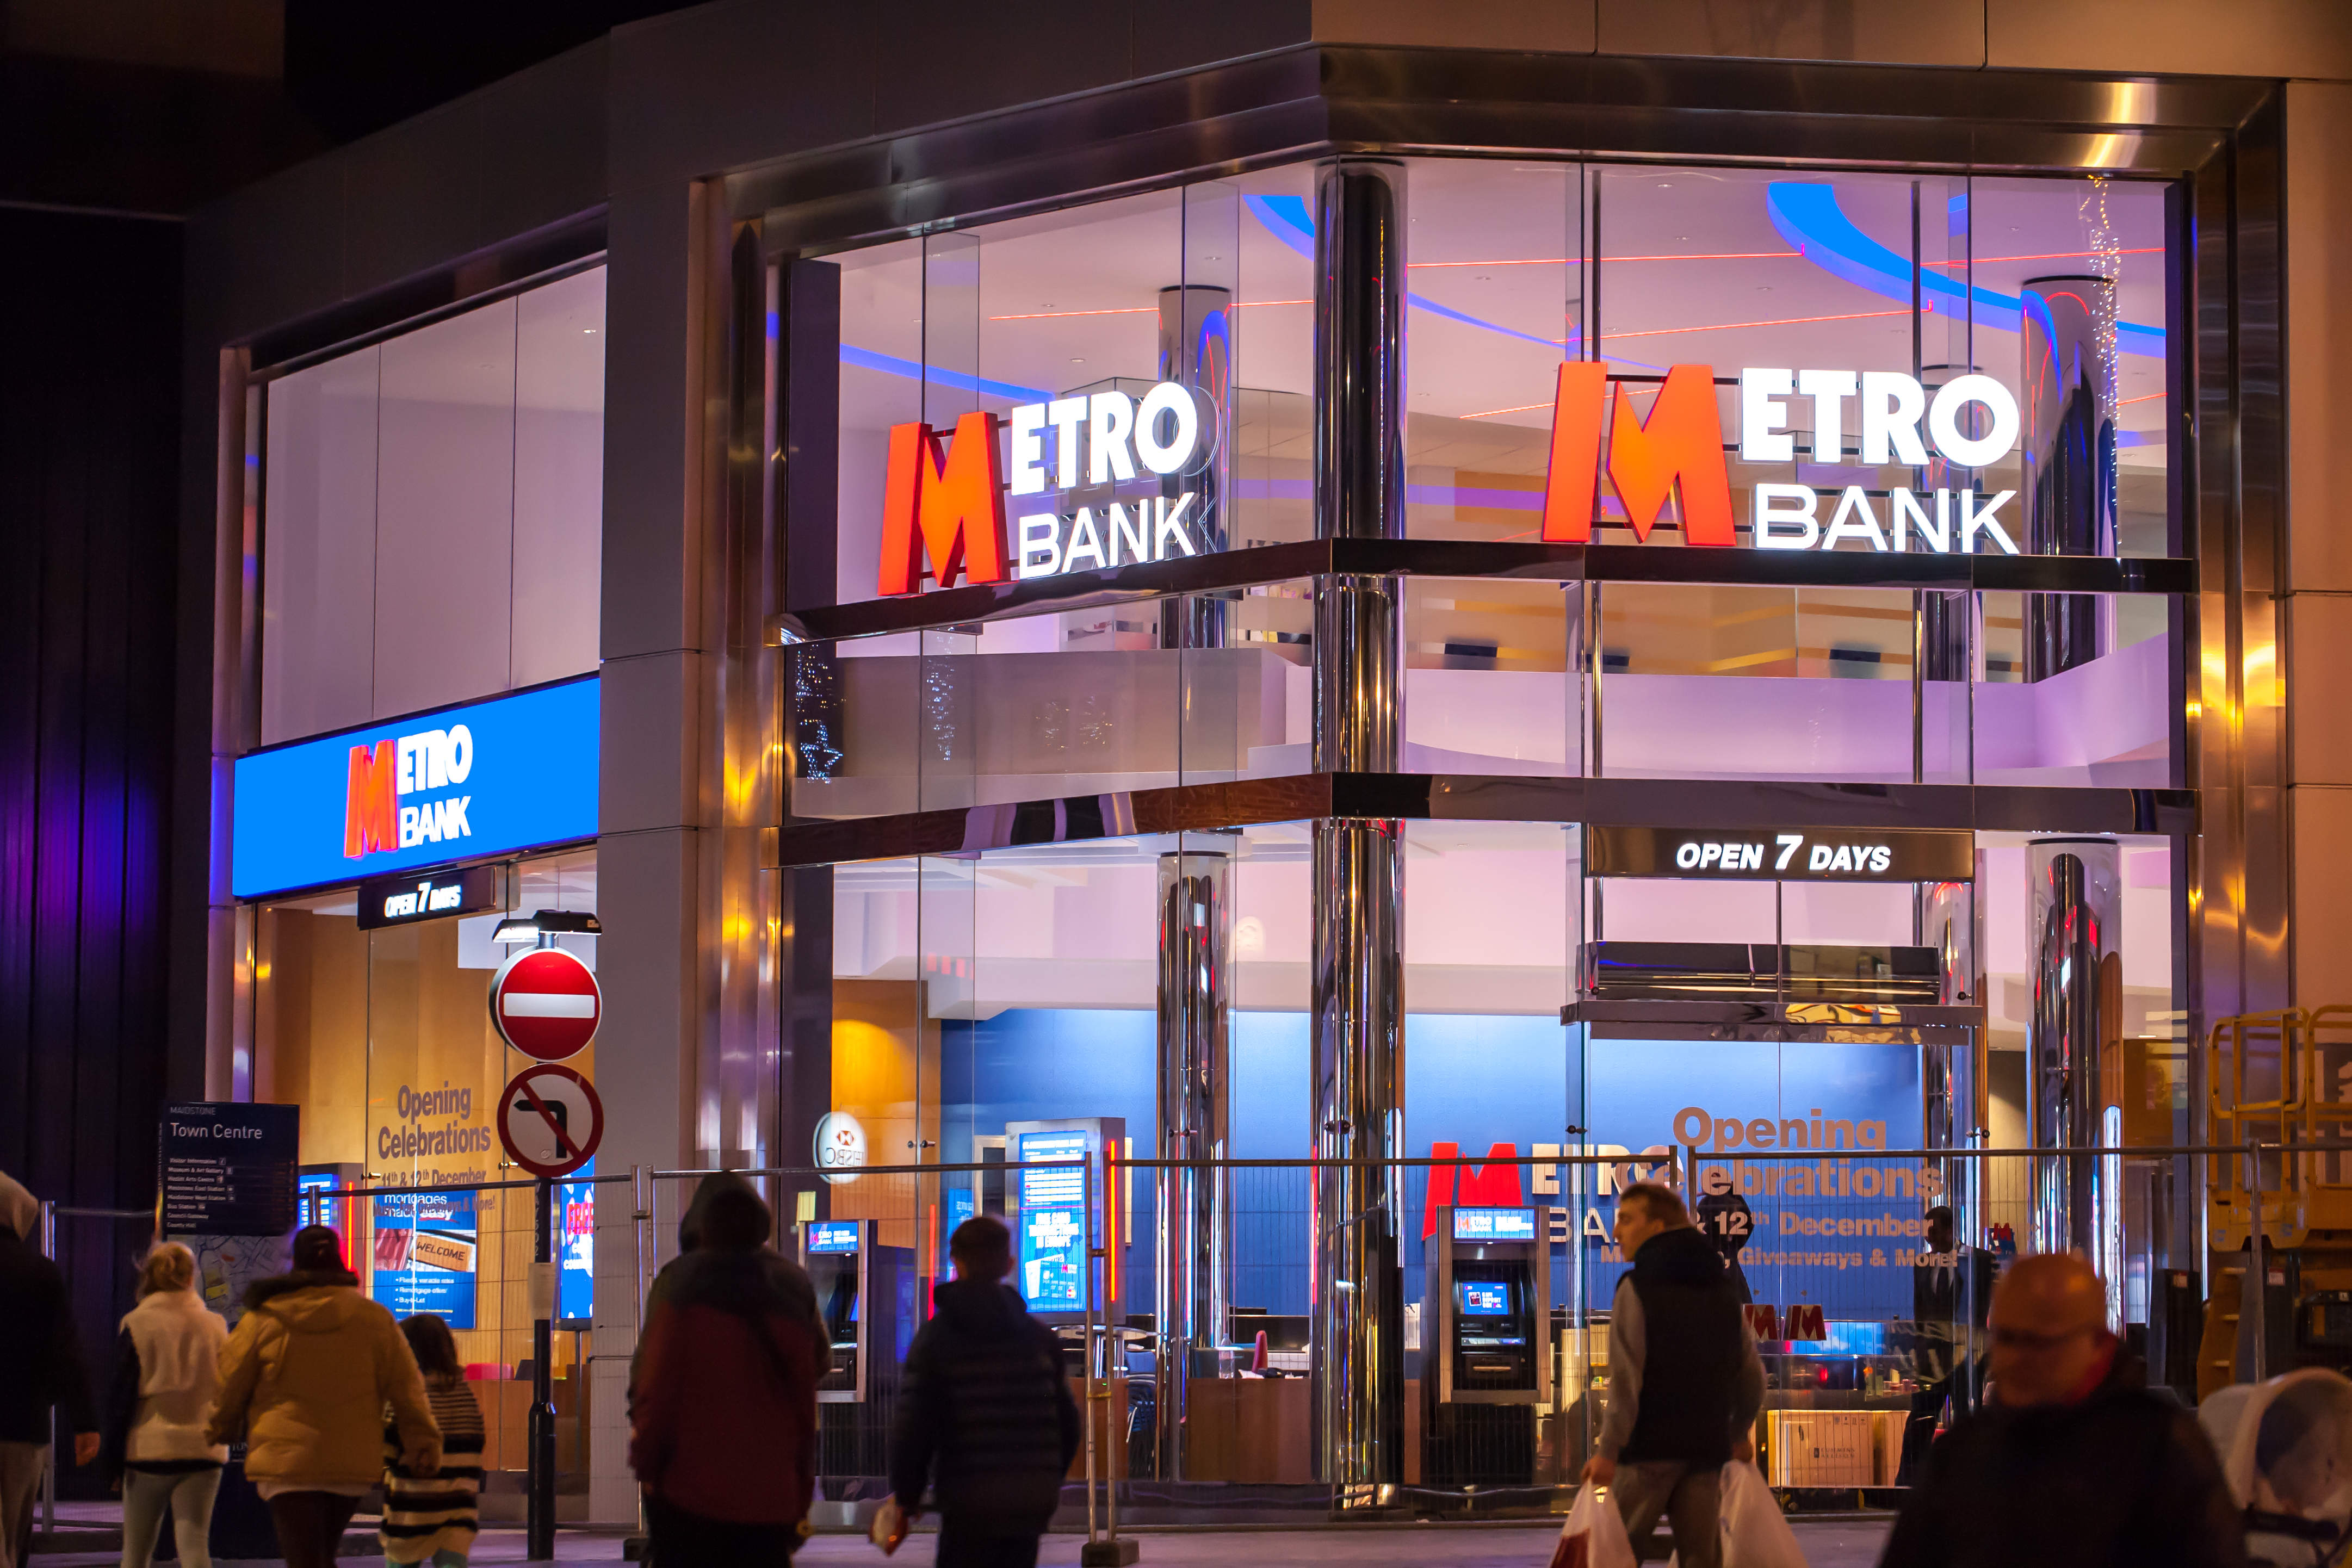 Metro Bank provides £800,000 facility to IT company